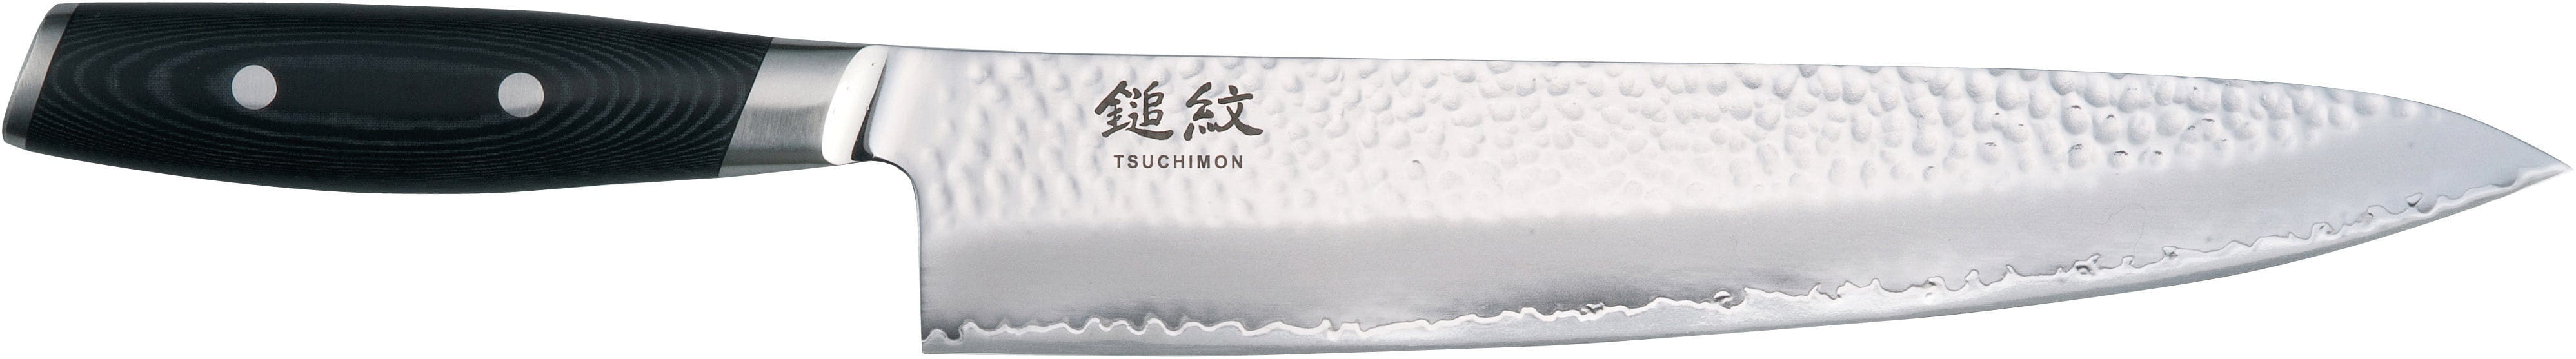 Yaxell Tsuchimon Chef's Messer, 25,5 cm